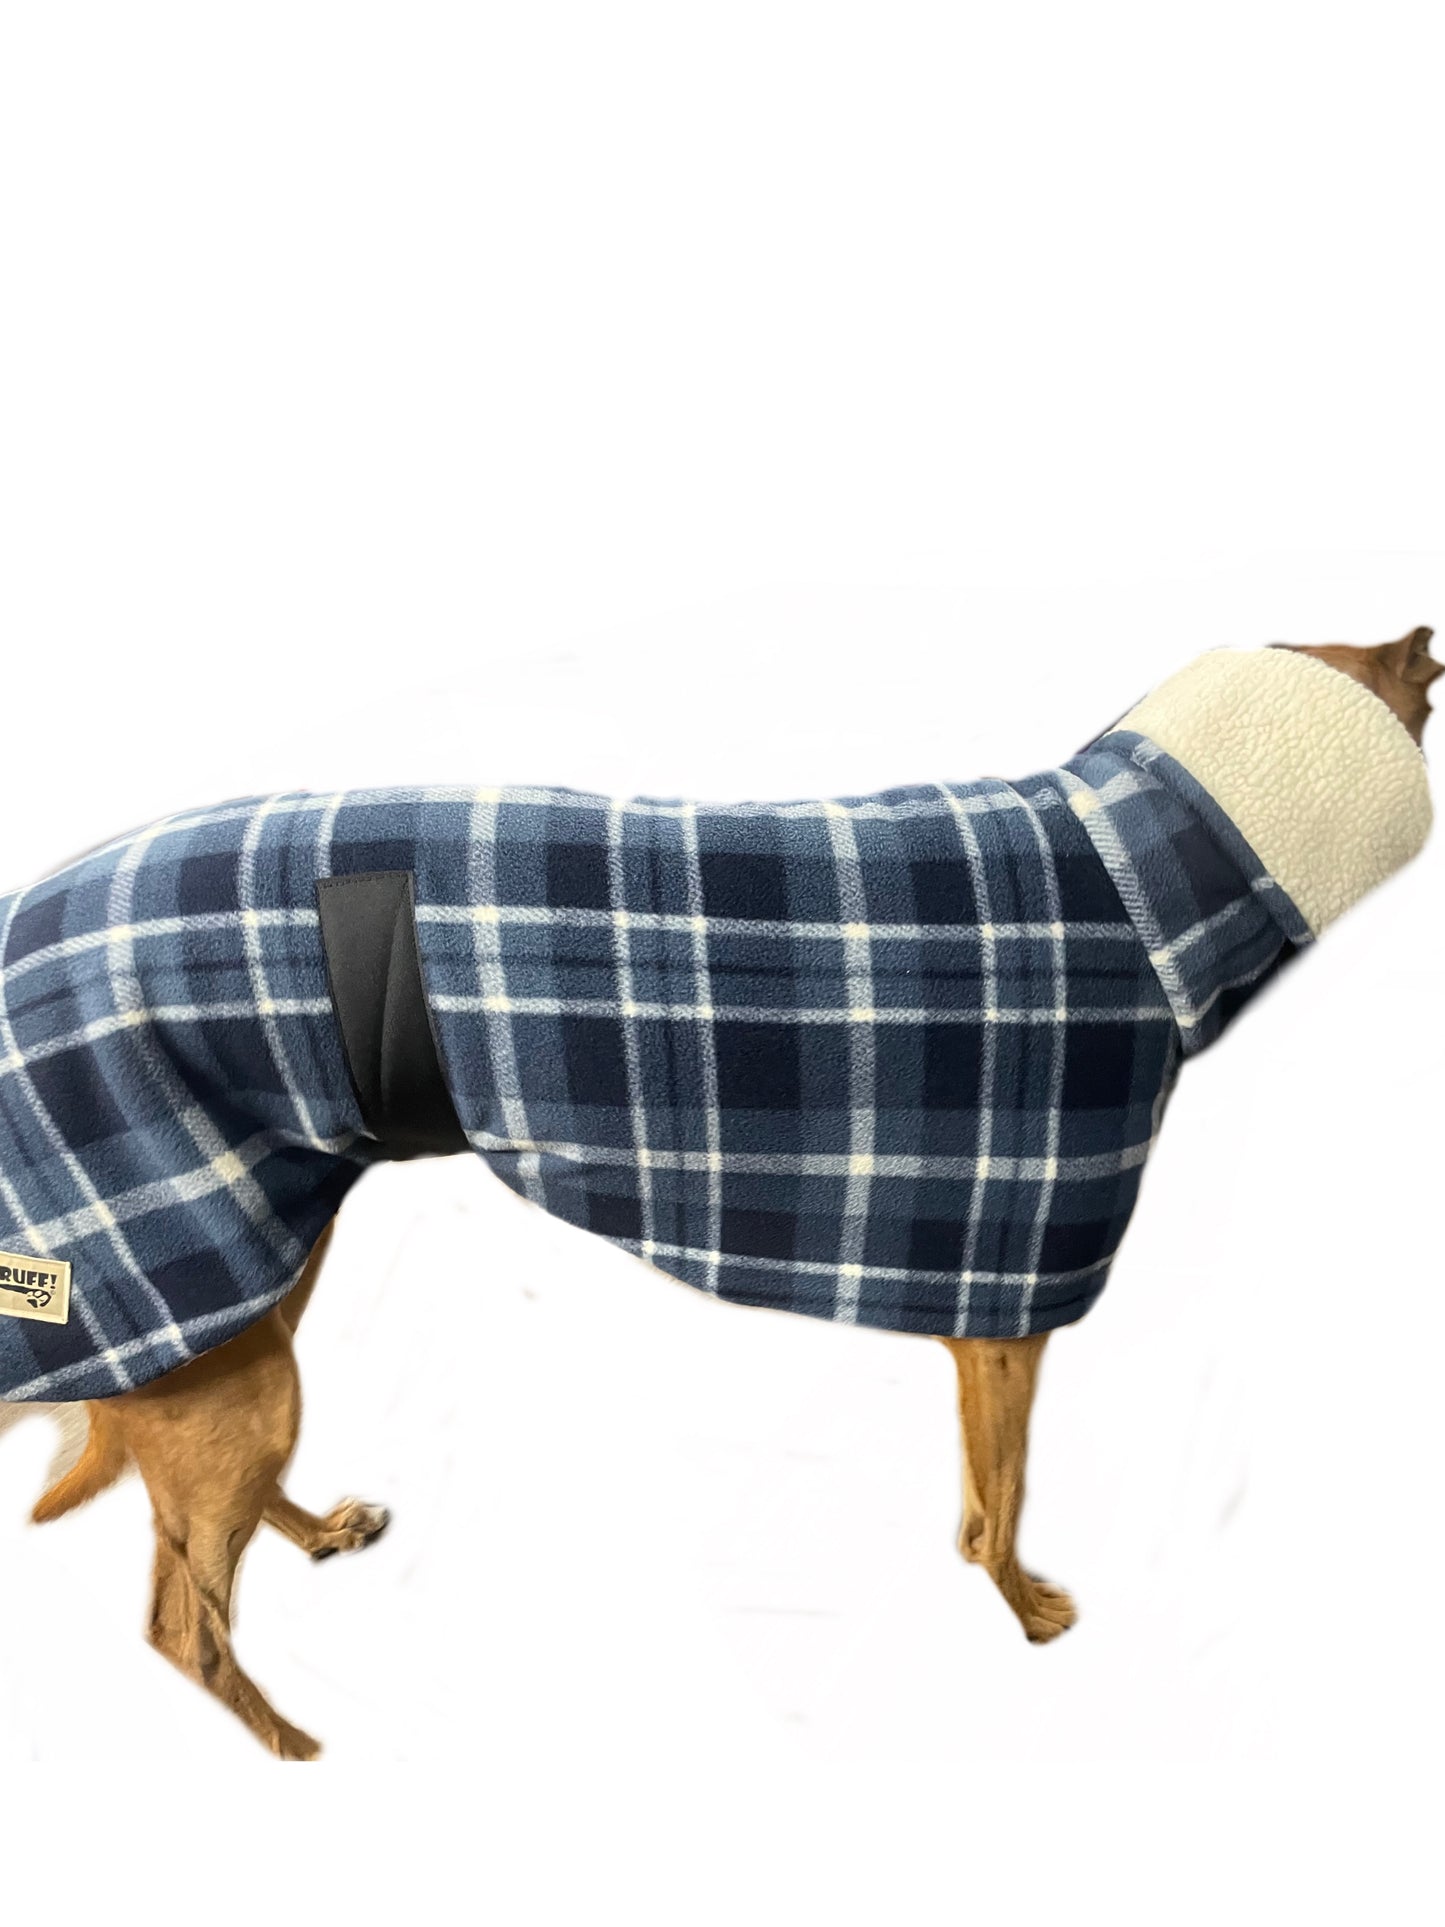 The navy blue Lumberjack Greyhound coat in deluxe style rug navy blue black tartan check  polar fleece washable extra wide neck